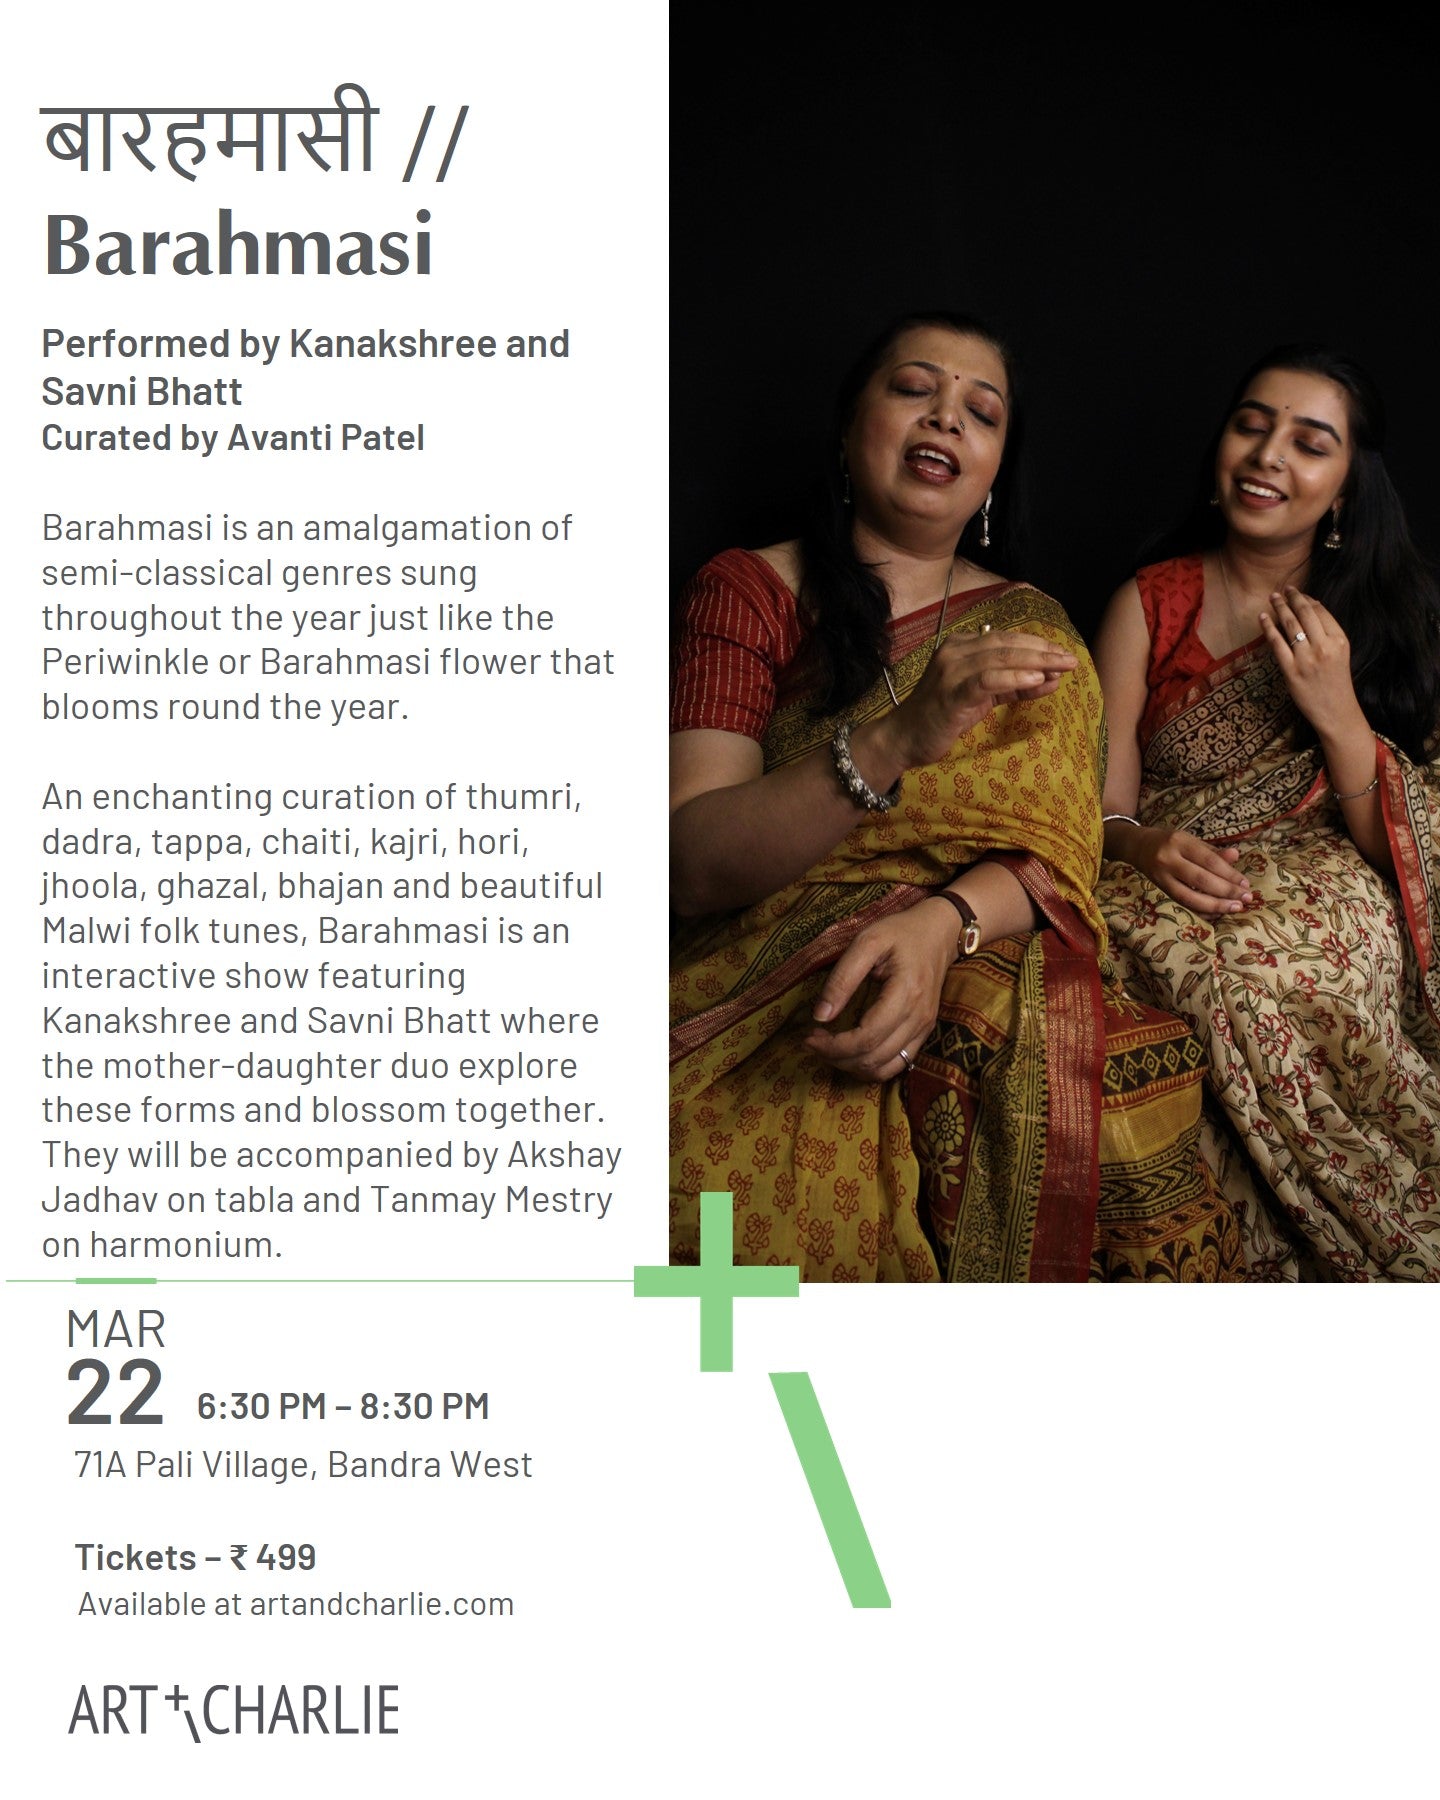 Ticket - Barahmasi - Kanakshree and Savni Bhatt - March 22 - 6:30 PM